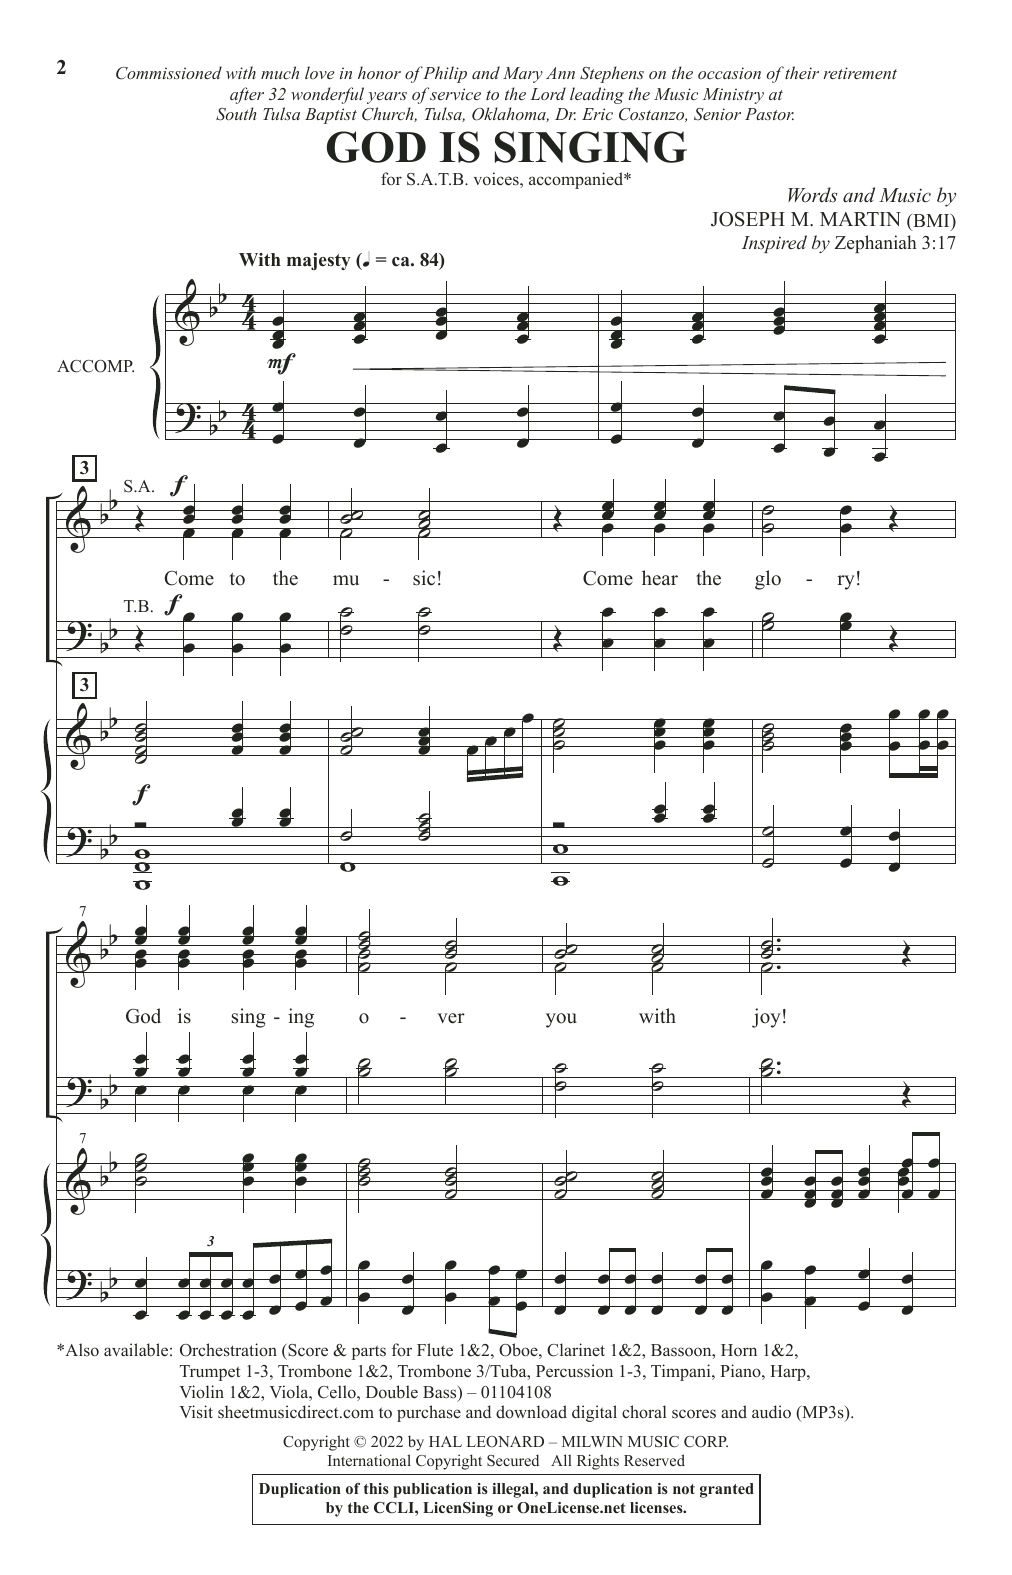 Joseph M. Martin God Is Singing Sheet Music Notes & Chords for SATB Choir - Download or Print PDF